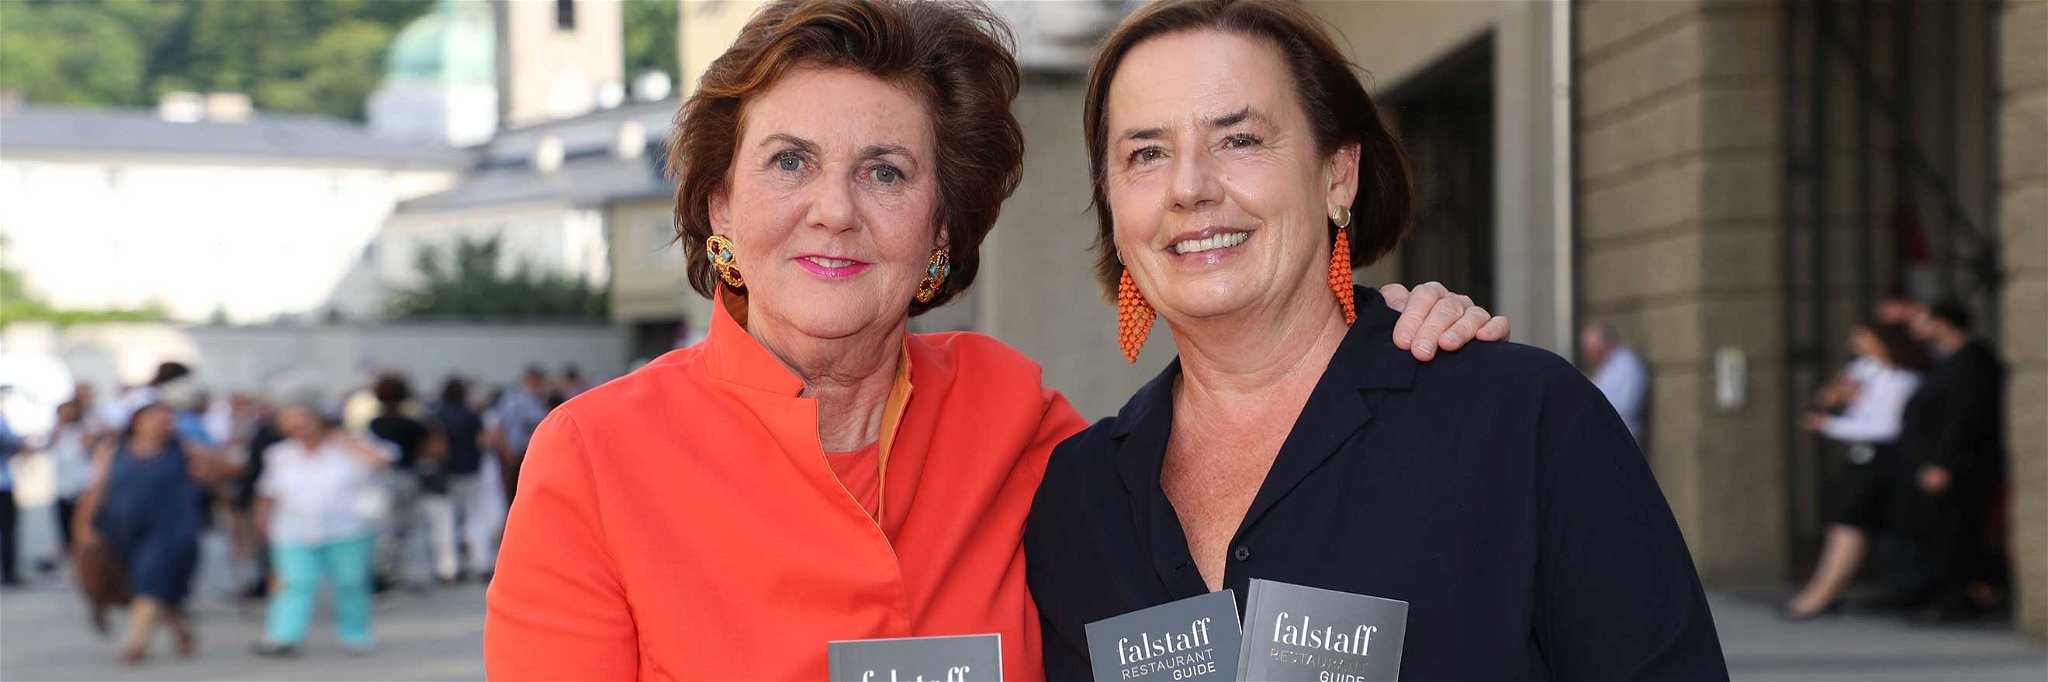 Festspiel-Präsidentin Dr. Helga Rabl-Stadler mit&nbsp; Ilse Fischer, Falstaff